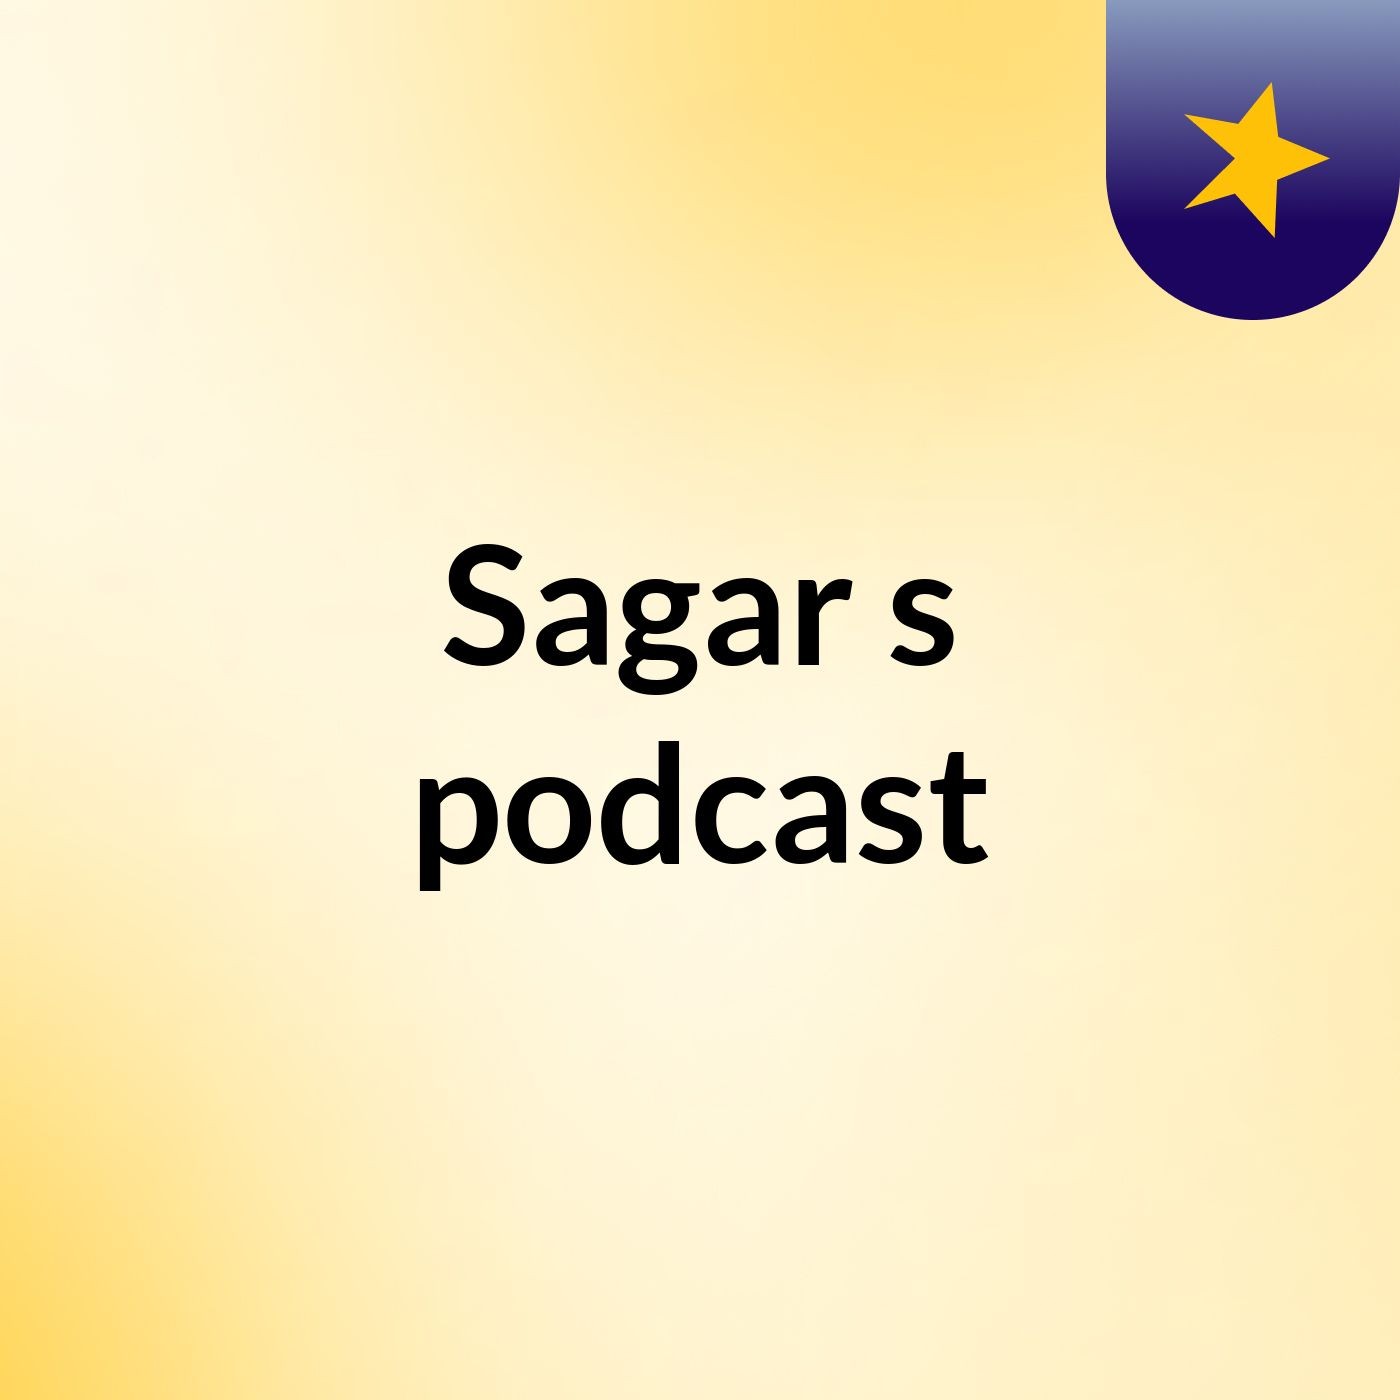 Episode 8 - Sagar's podcast